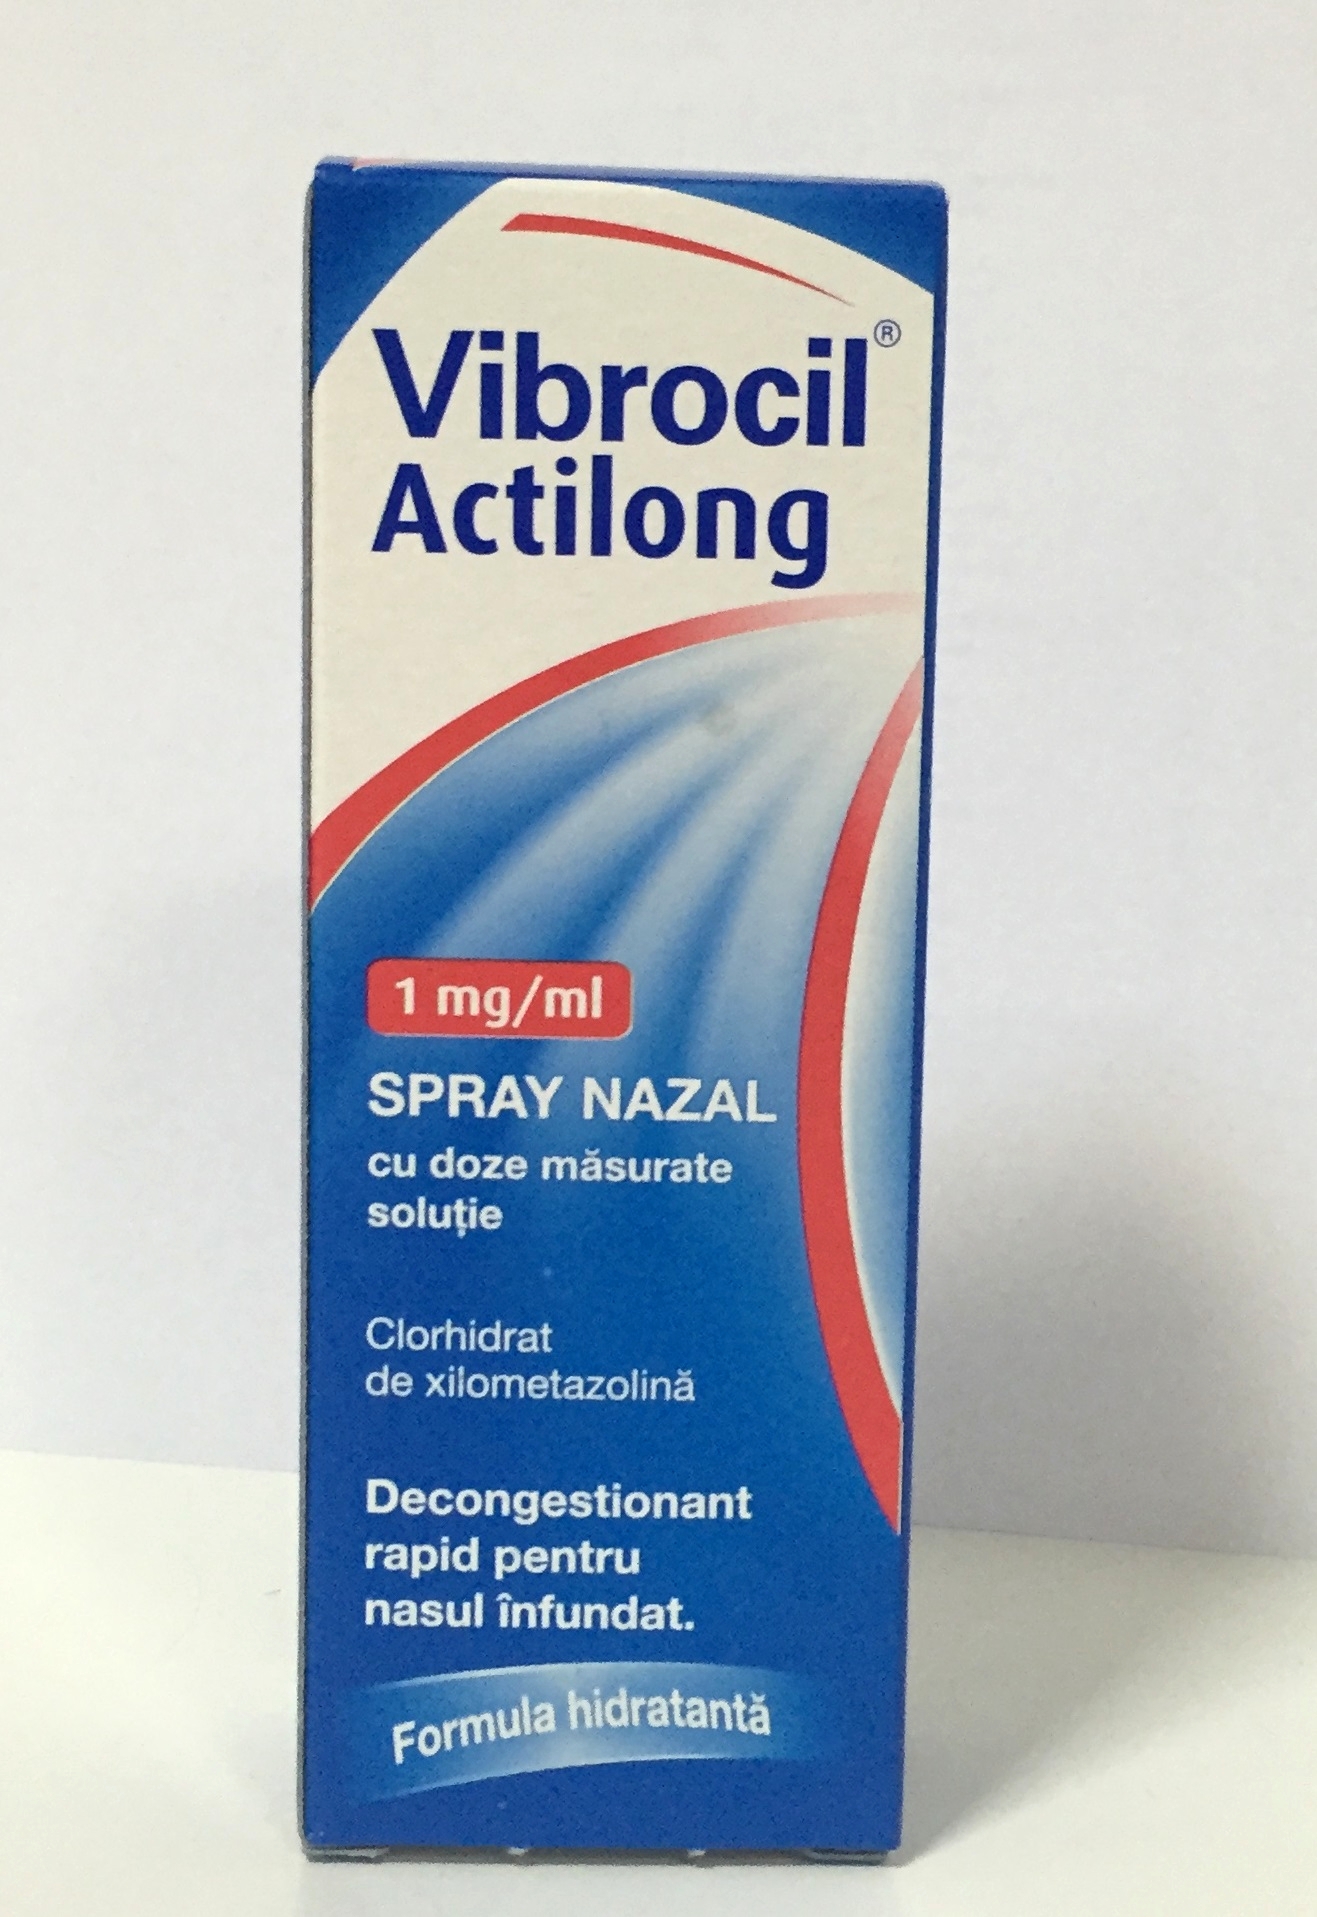 Nas infundat - Vibrocil Actilon G Spray Nazal, Soluţie, 1mg/ml, 10 ml, Gsk, farmacieieftina.ro